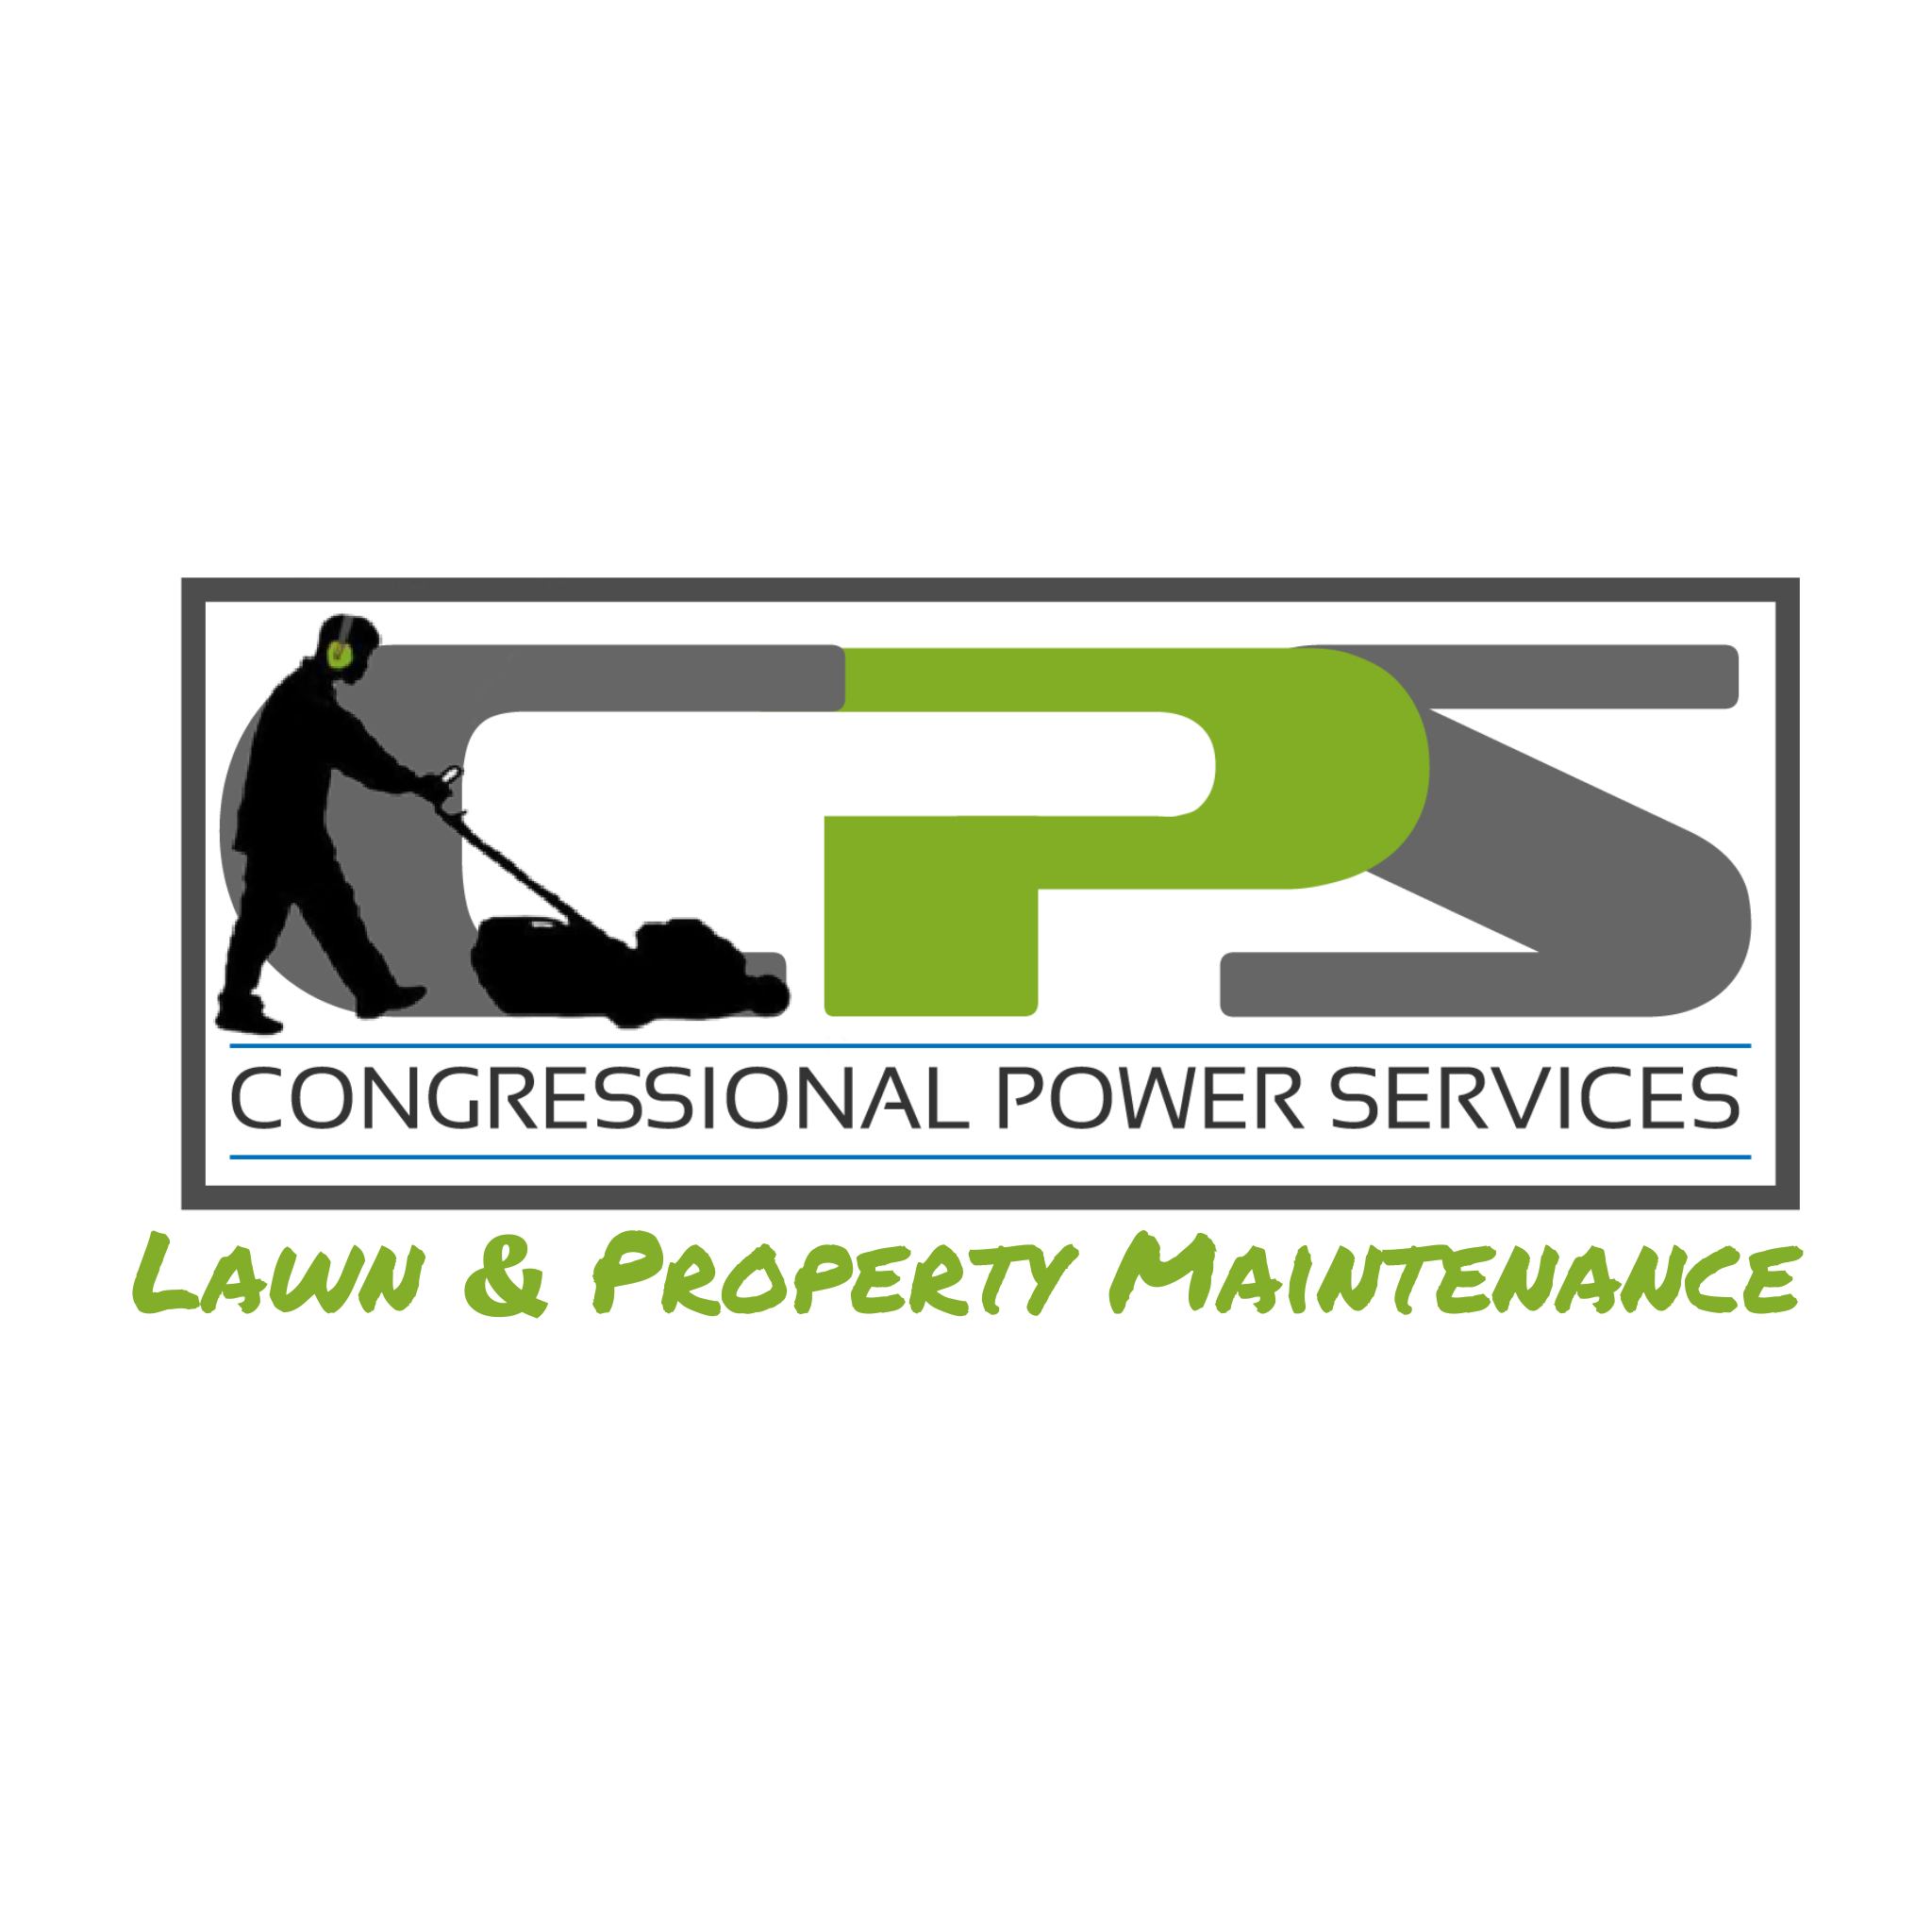 Congressional Power Services Logo